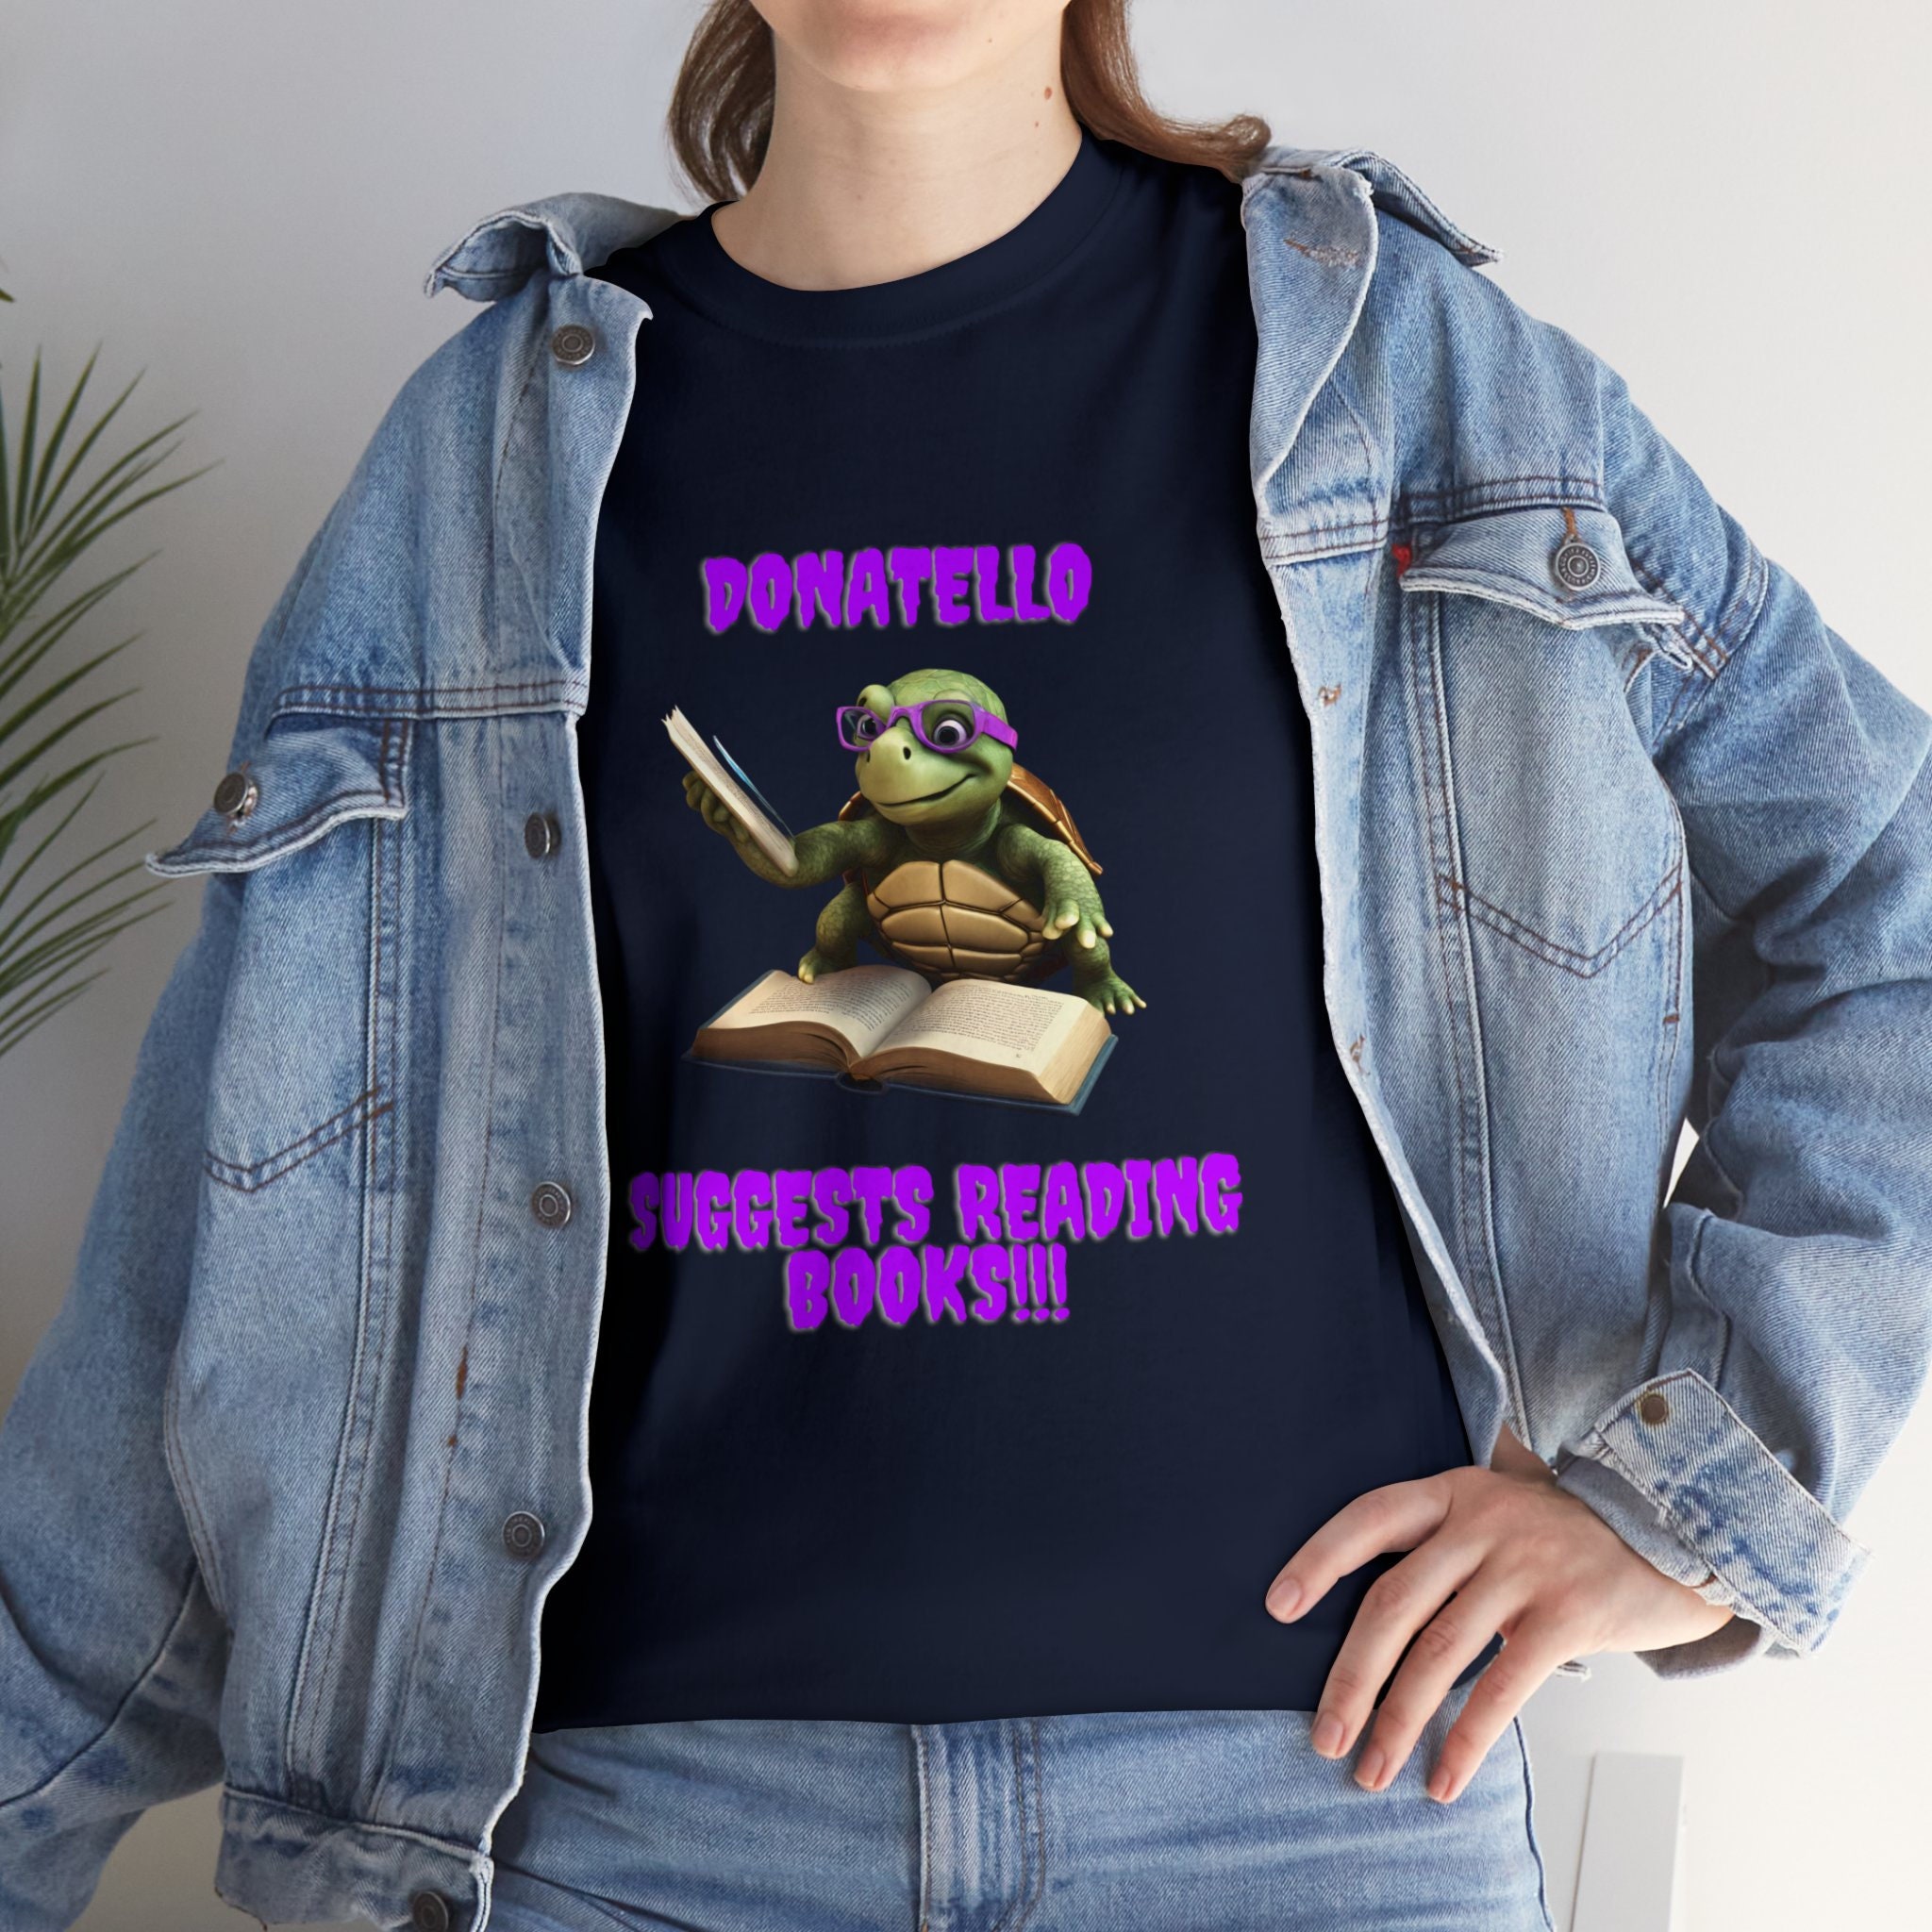 Teenage Mutant Ninja Turtles Japanese 80's Adult T-Shirt, Men's, Size: Small, Blue